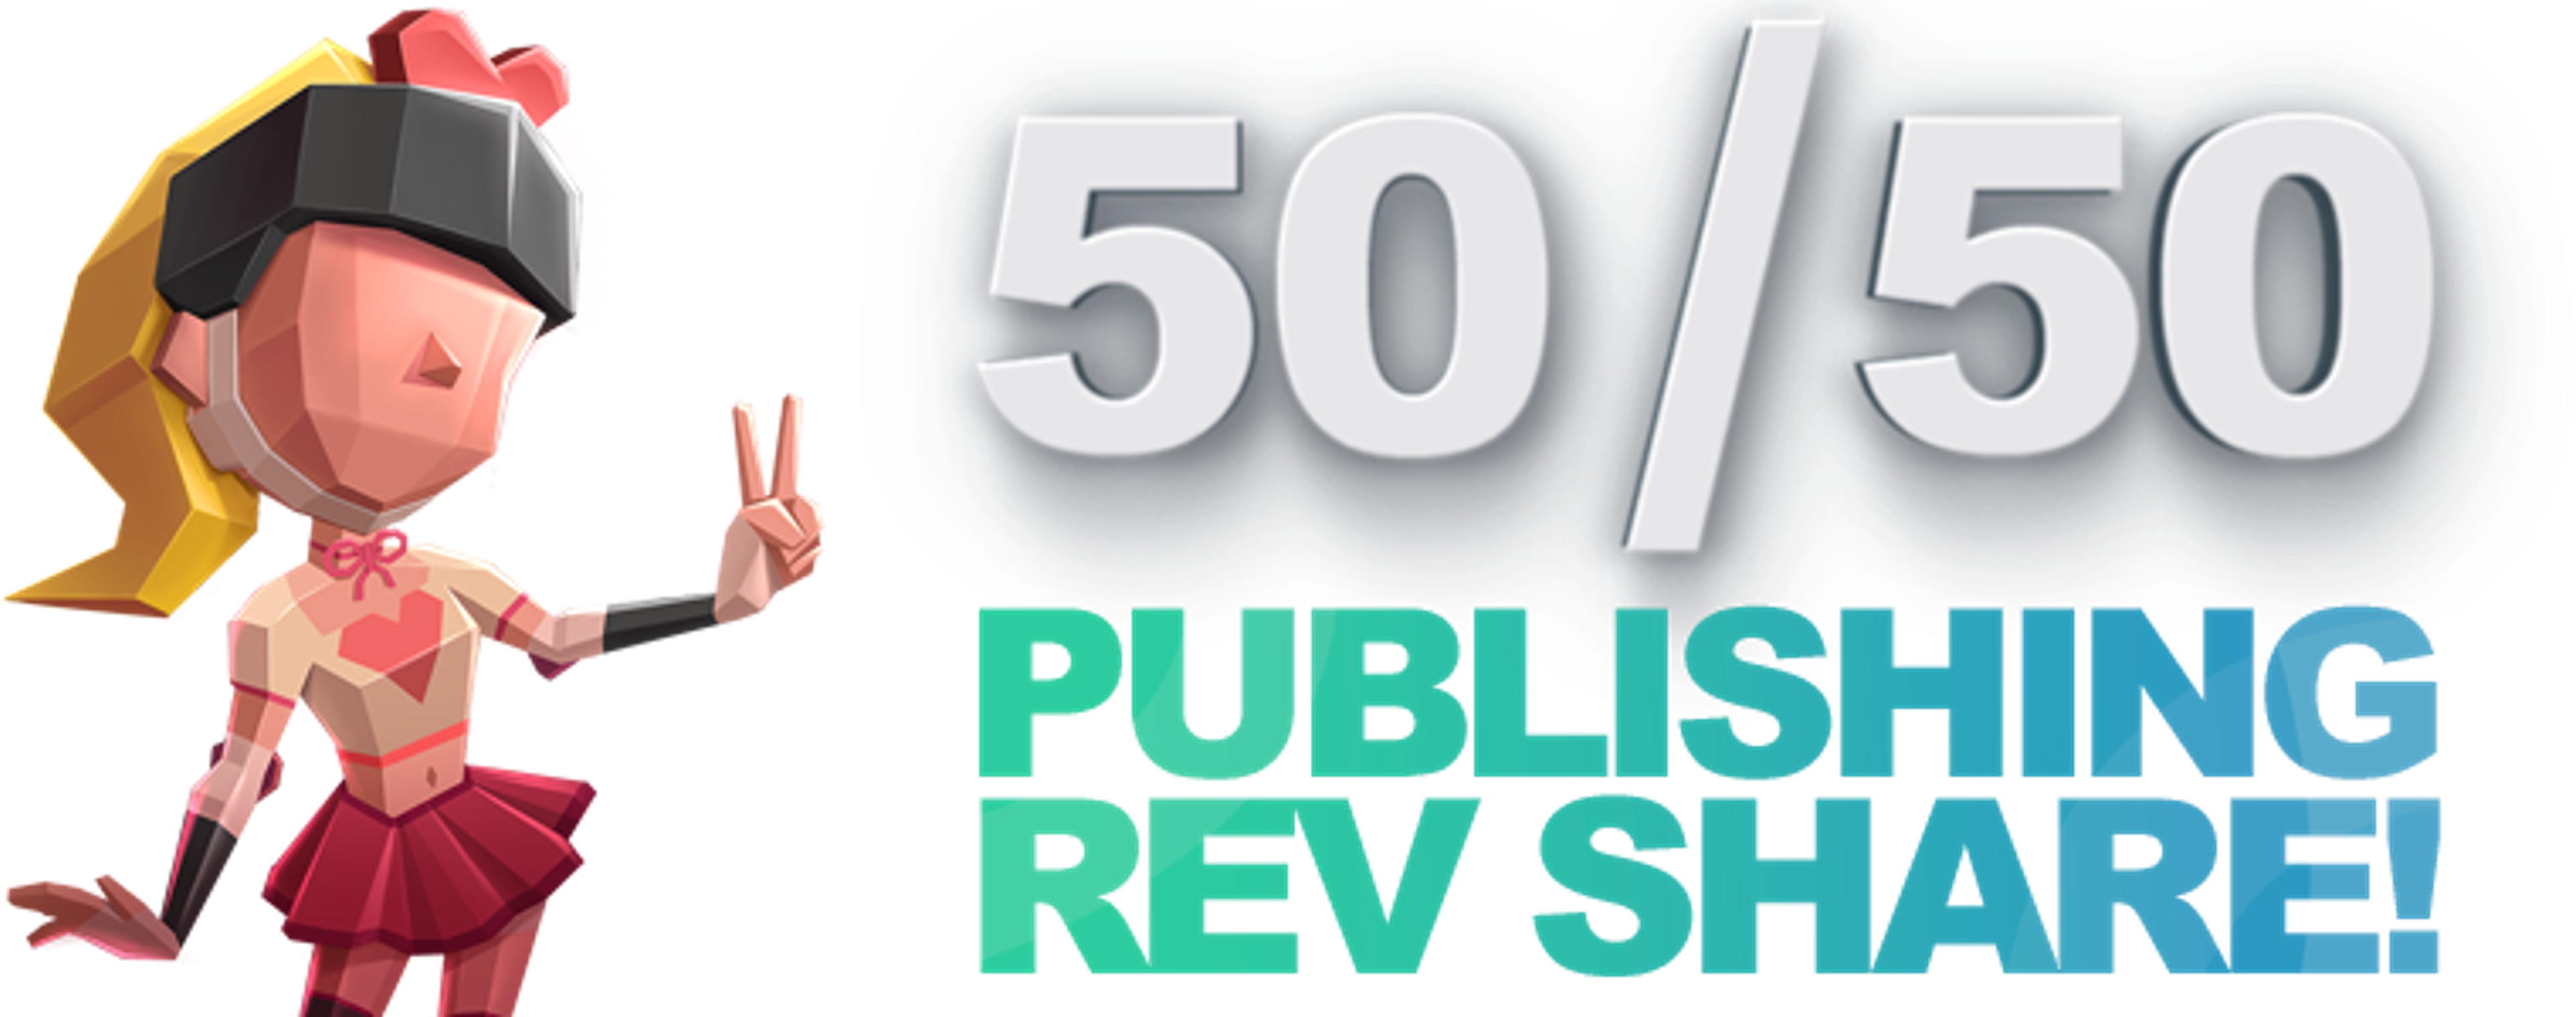 Win 50% of publishing revenue share.